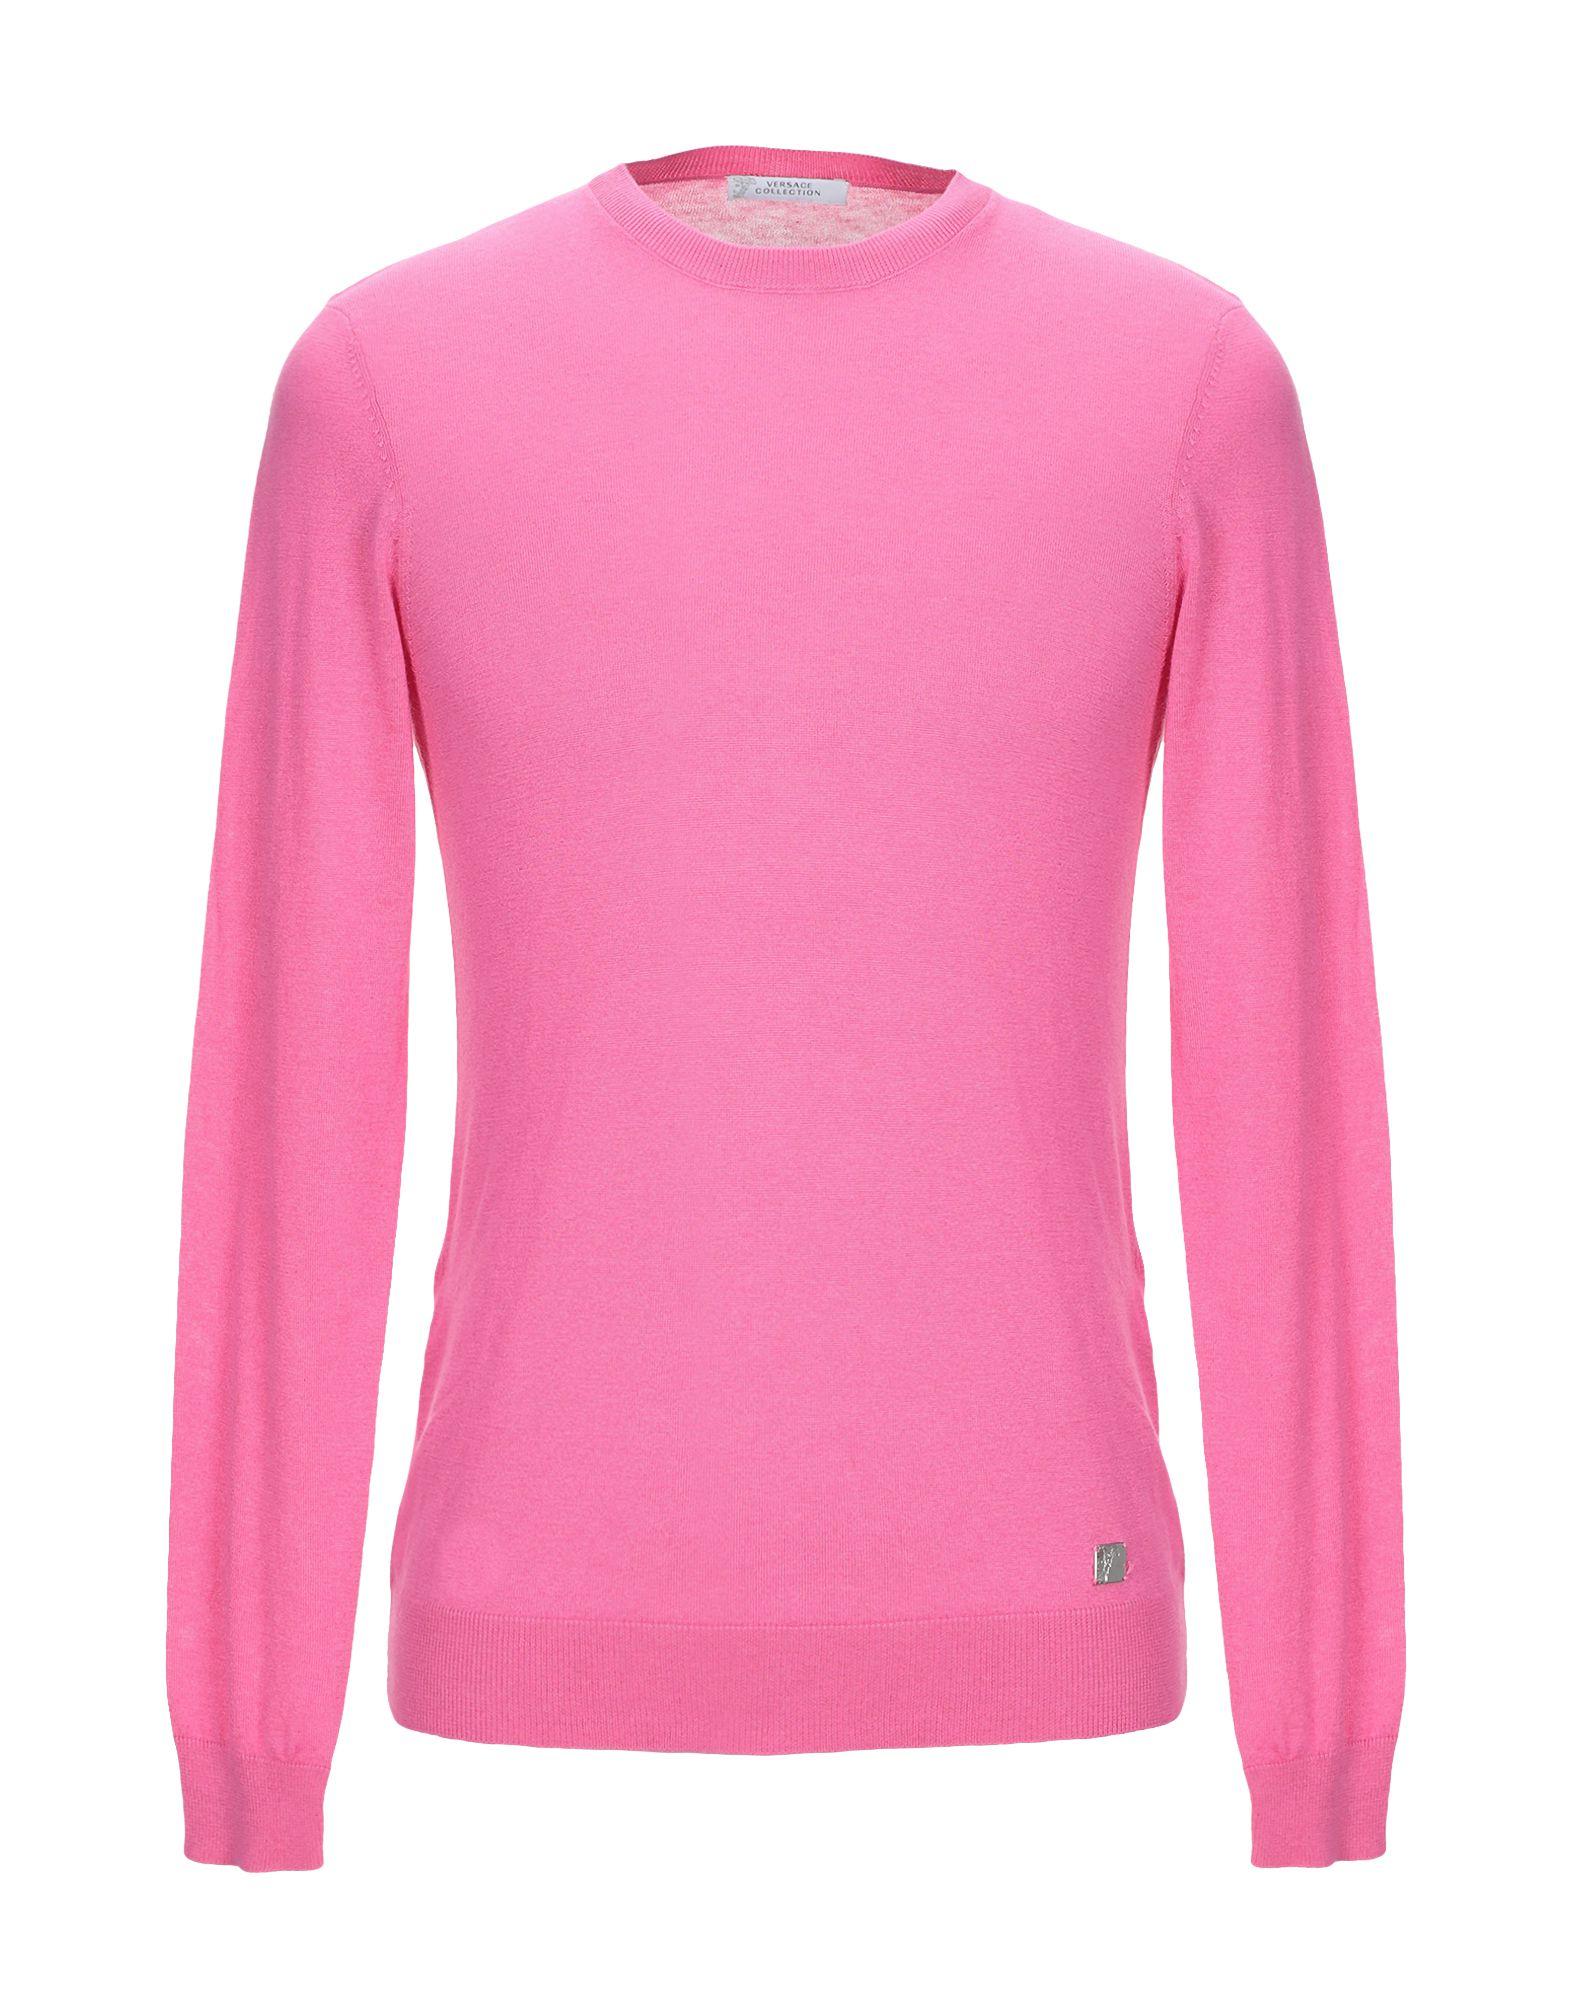 versace pink sweater